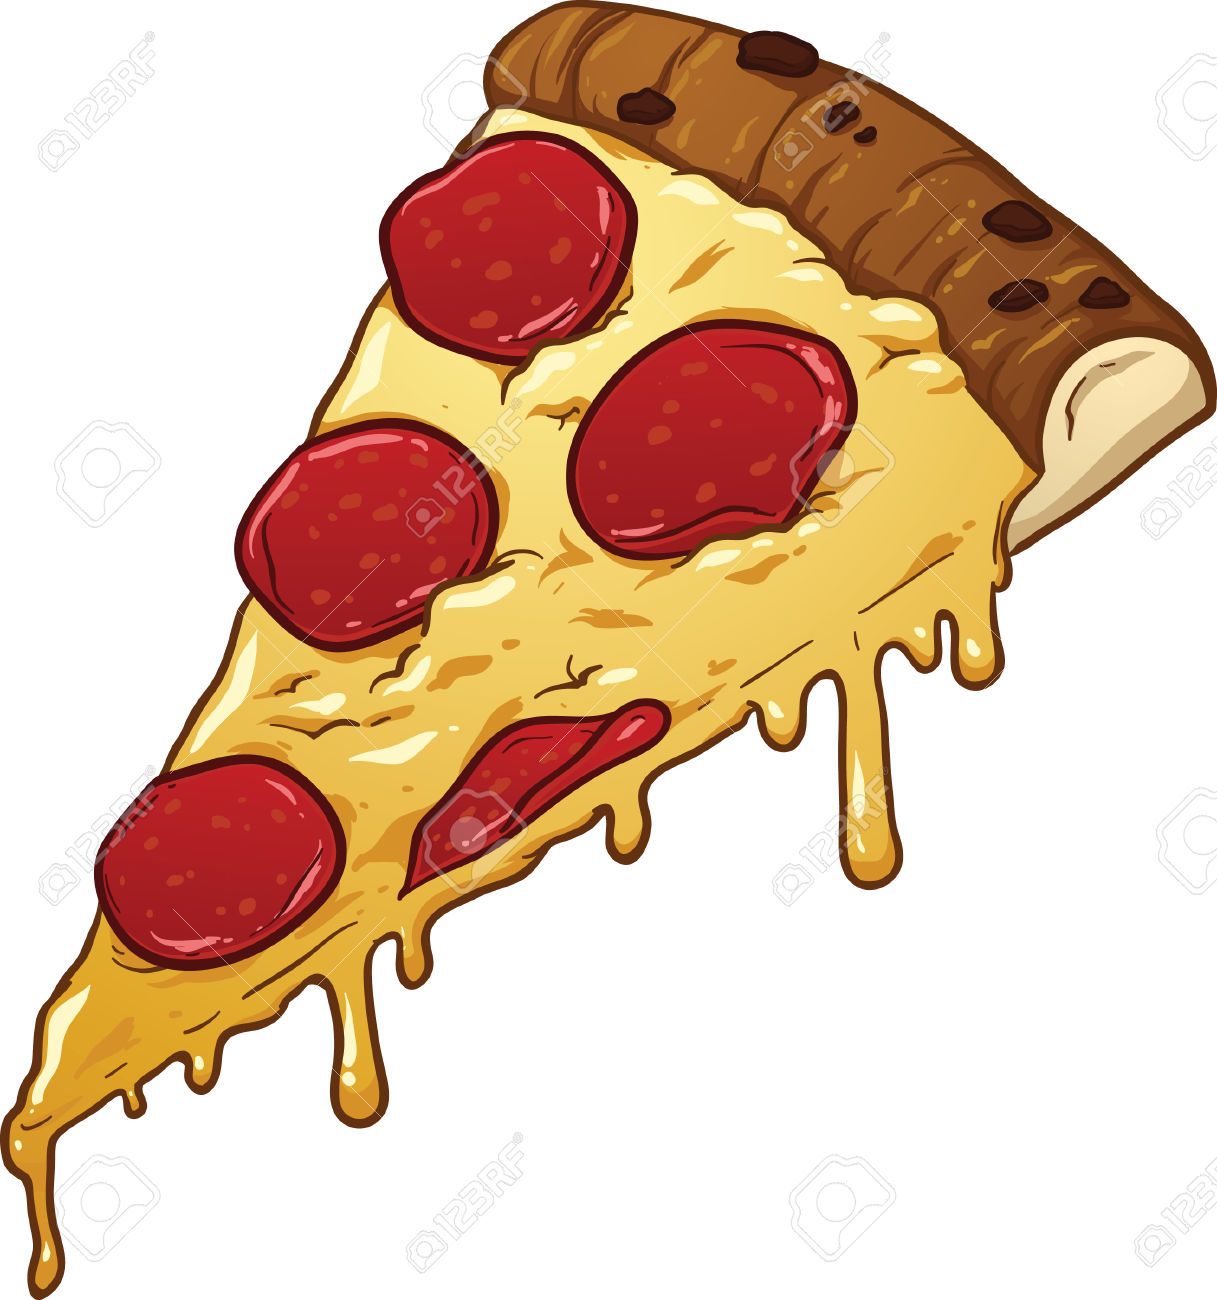 Pizza illustration google.